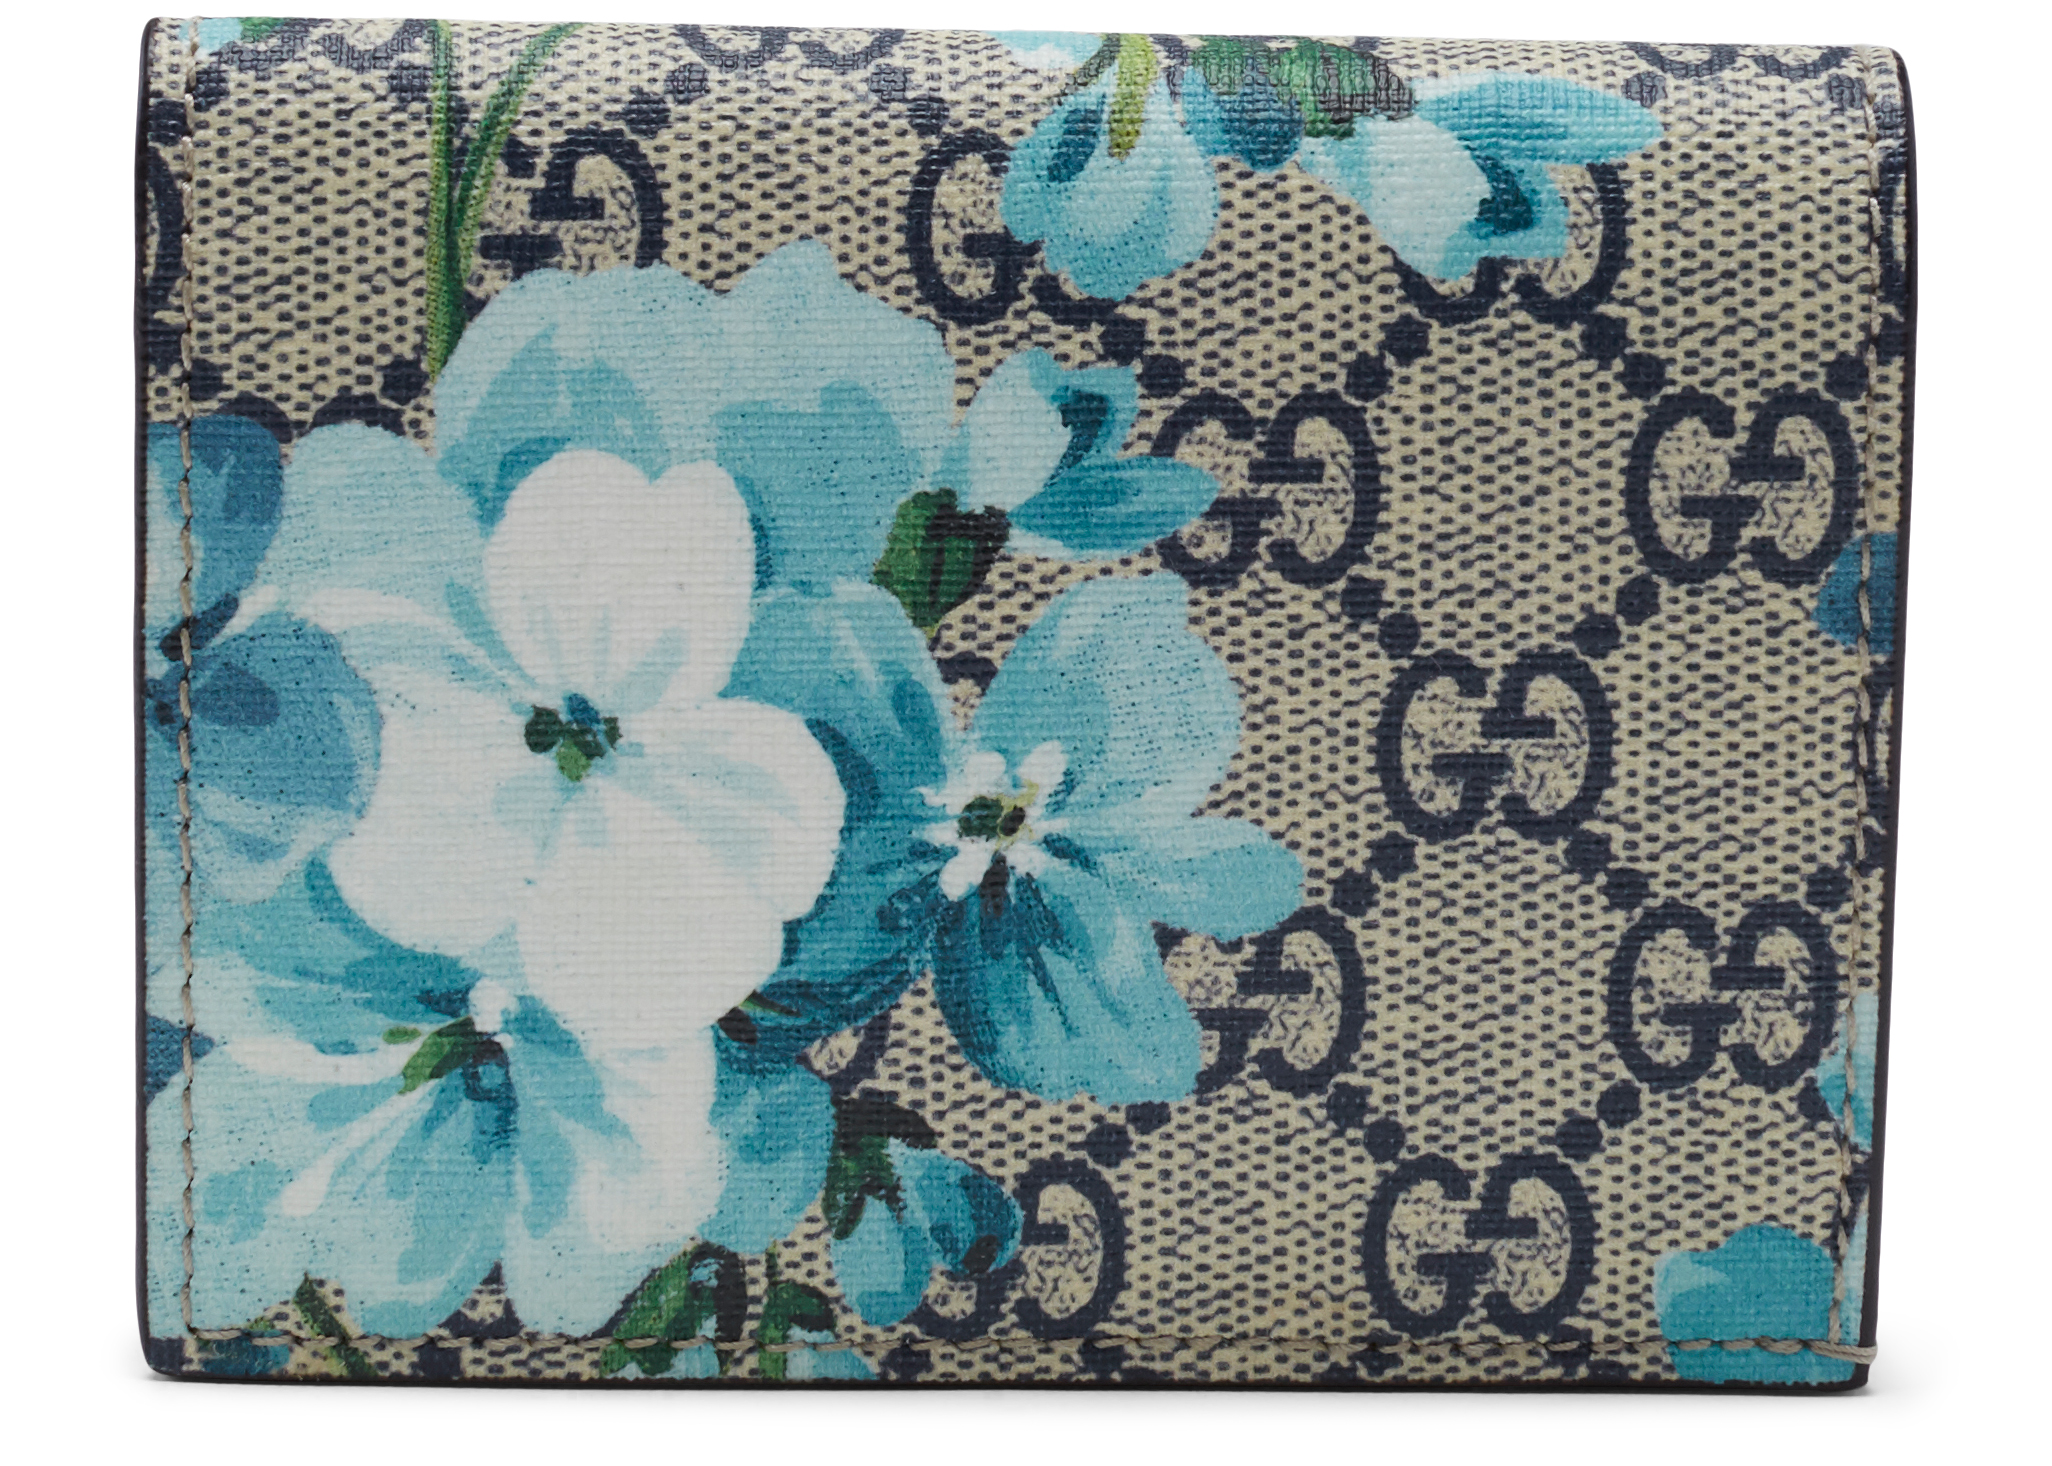 gucci bloom wallet